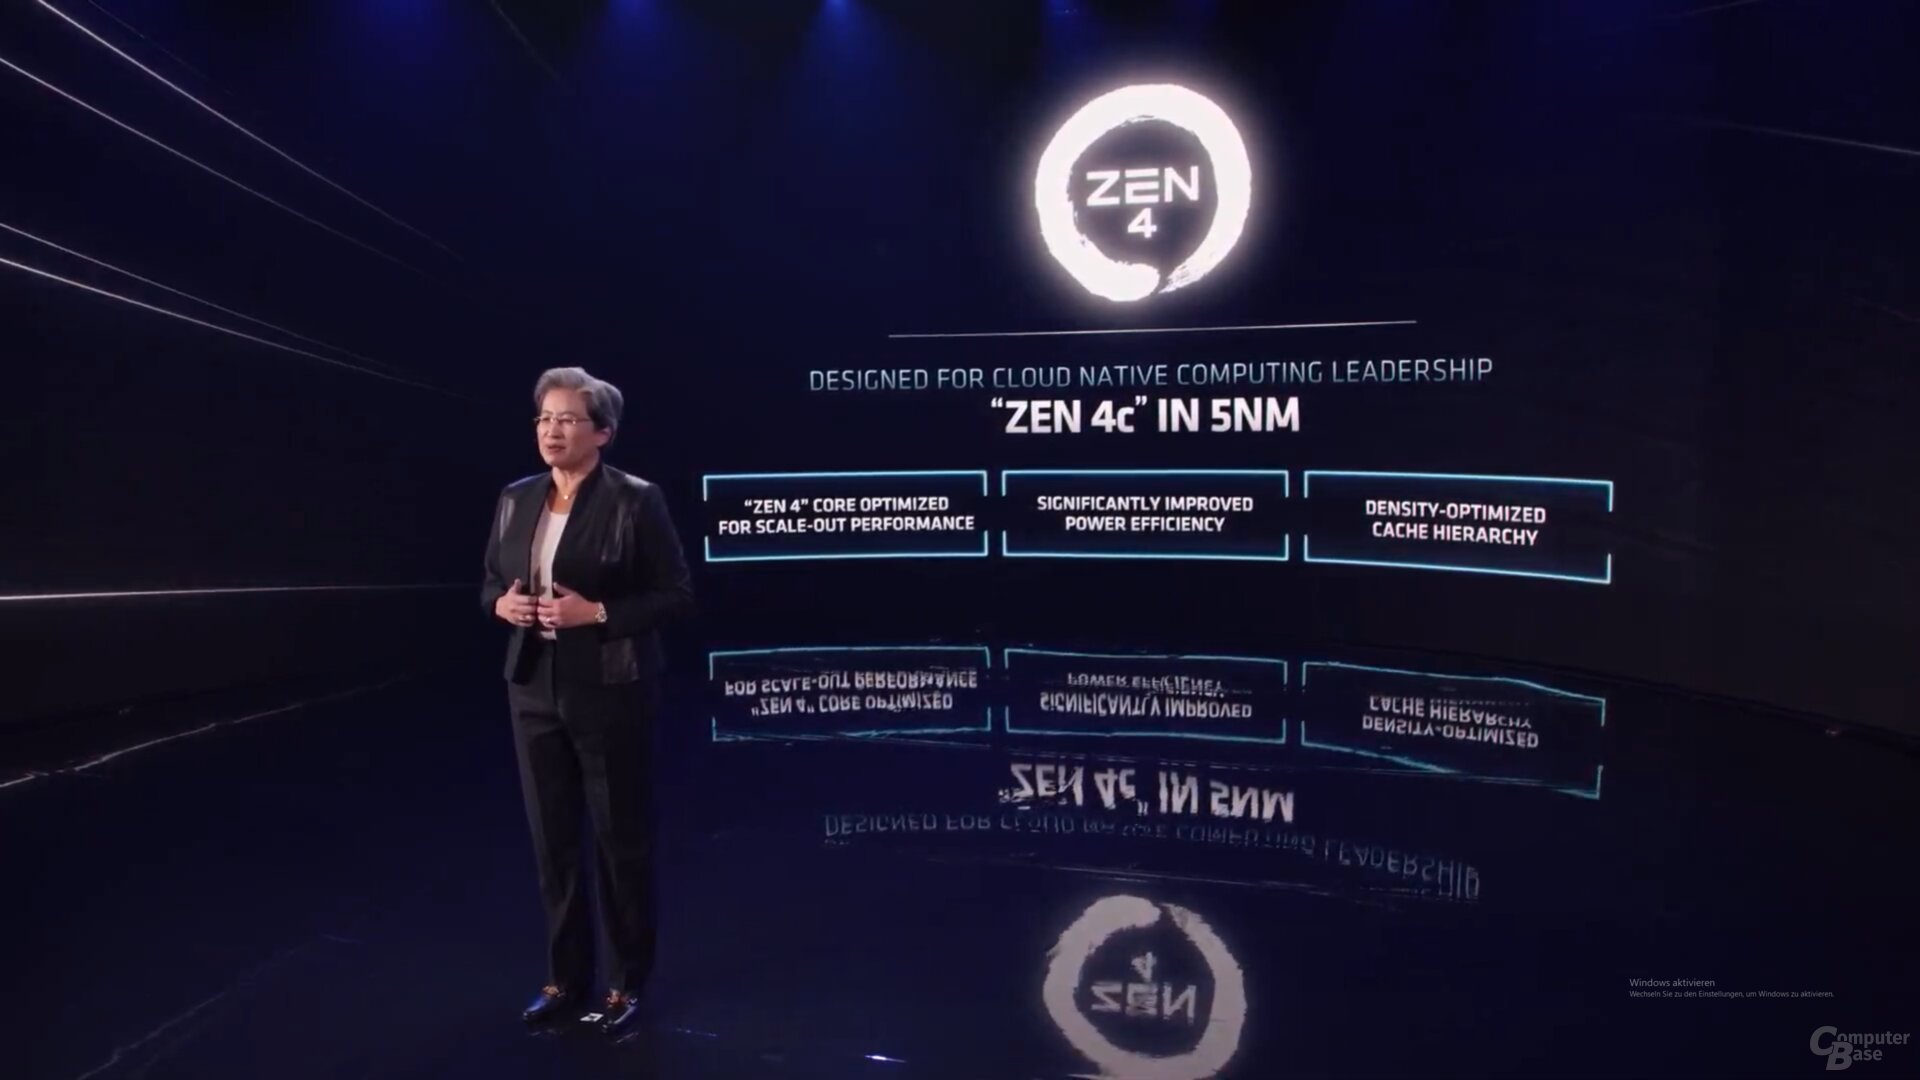 Zen 4 at 5 nm, presumably TSMC N5P